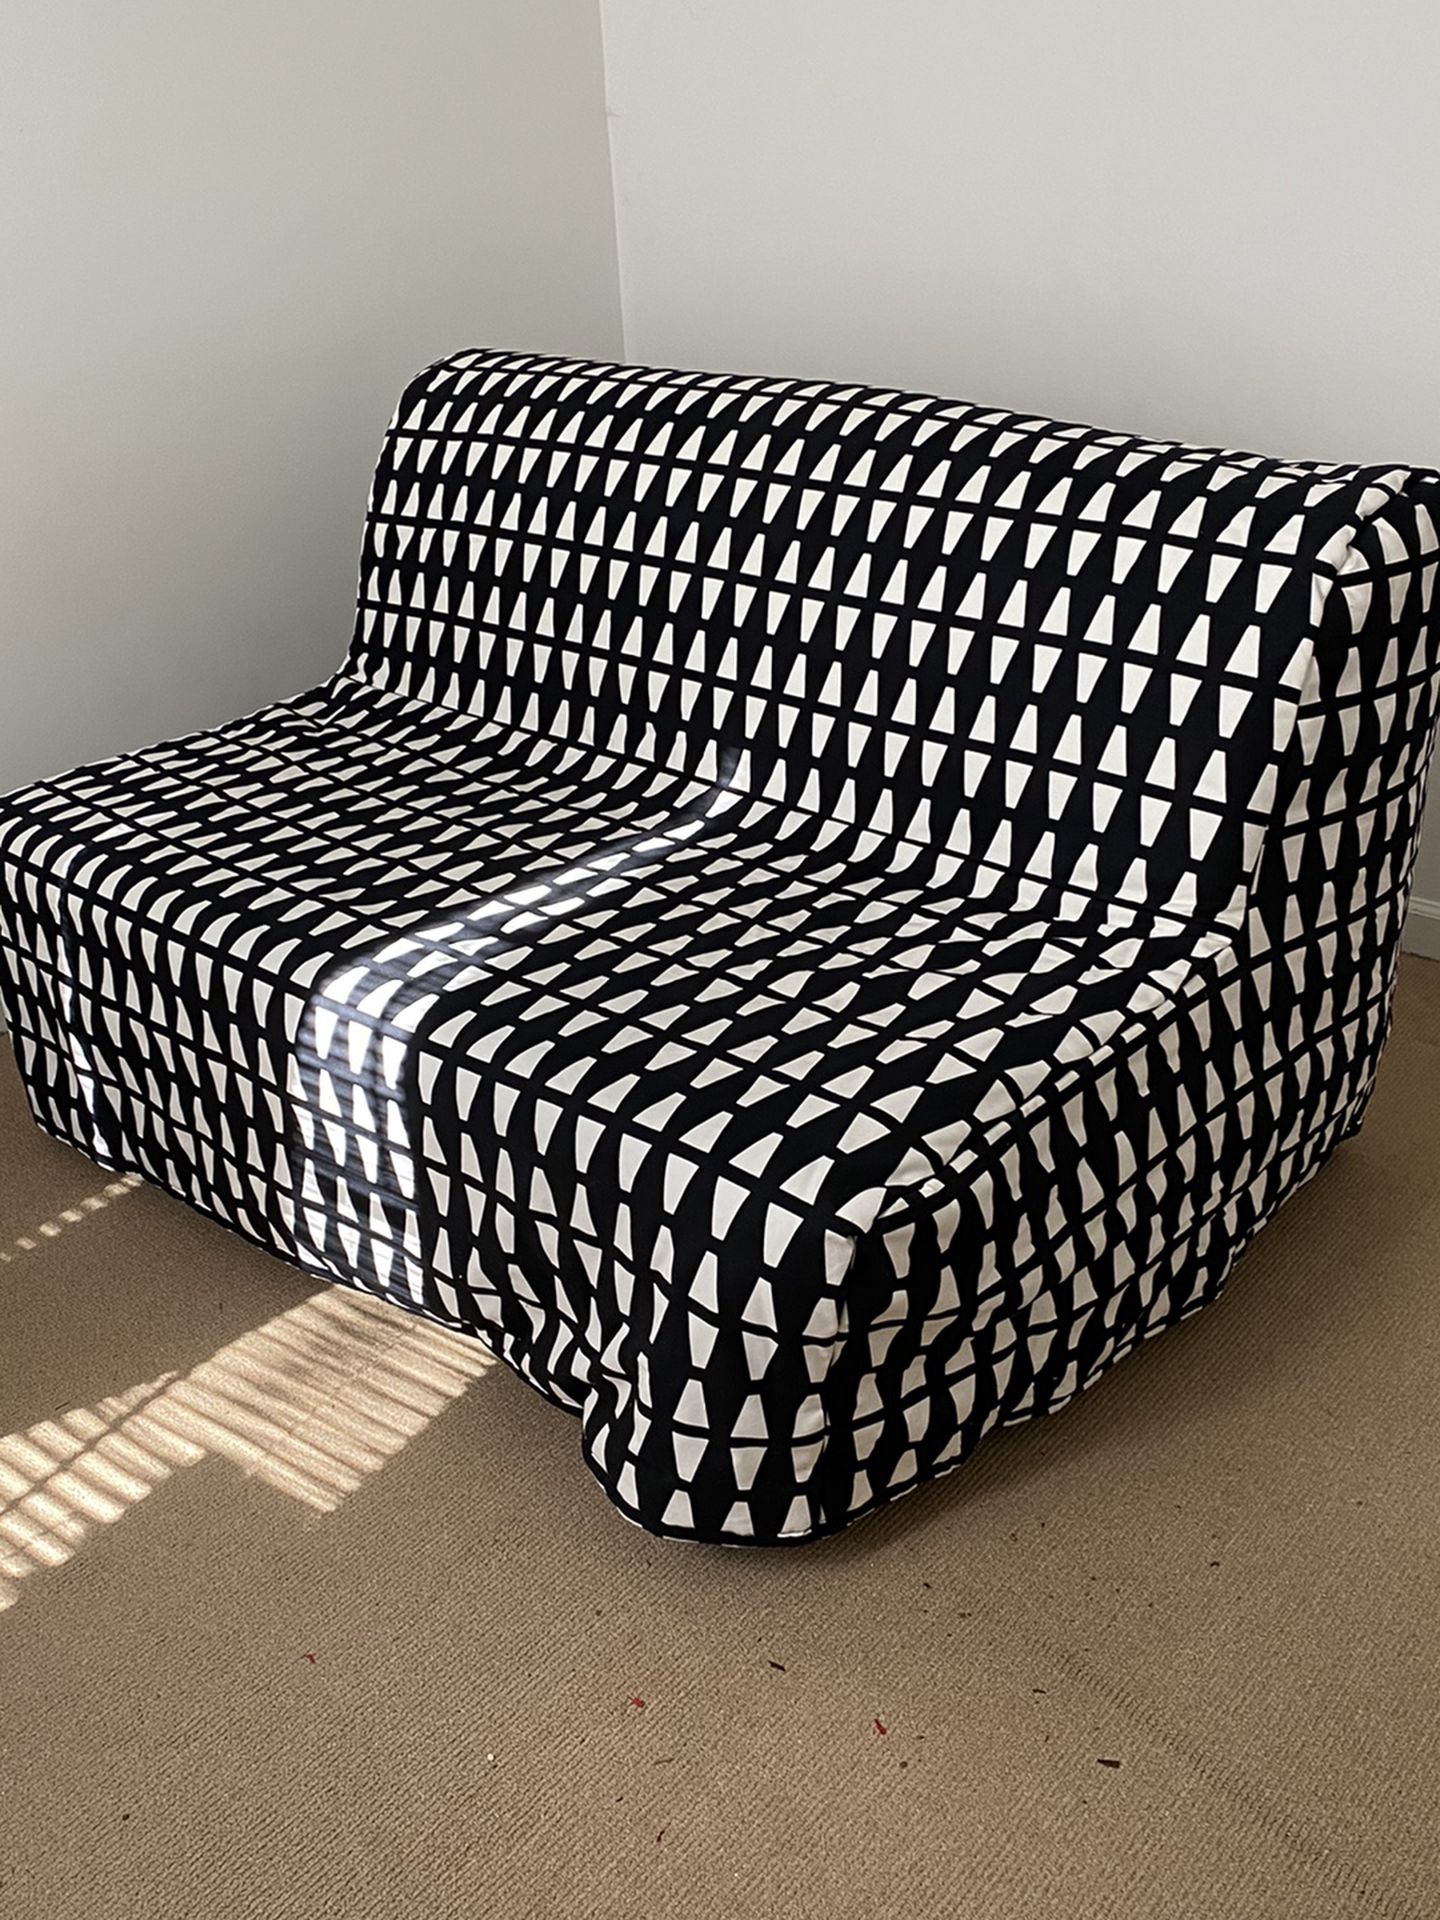 IKEA convertible couch/futon W/ B&W Cover